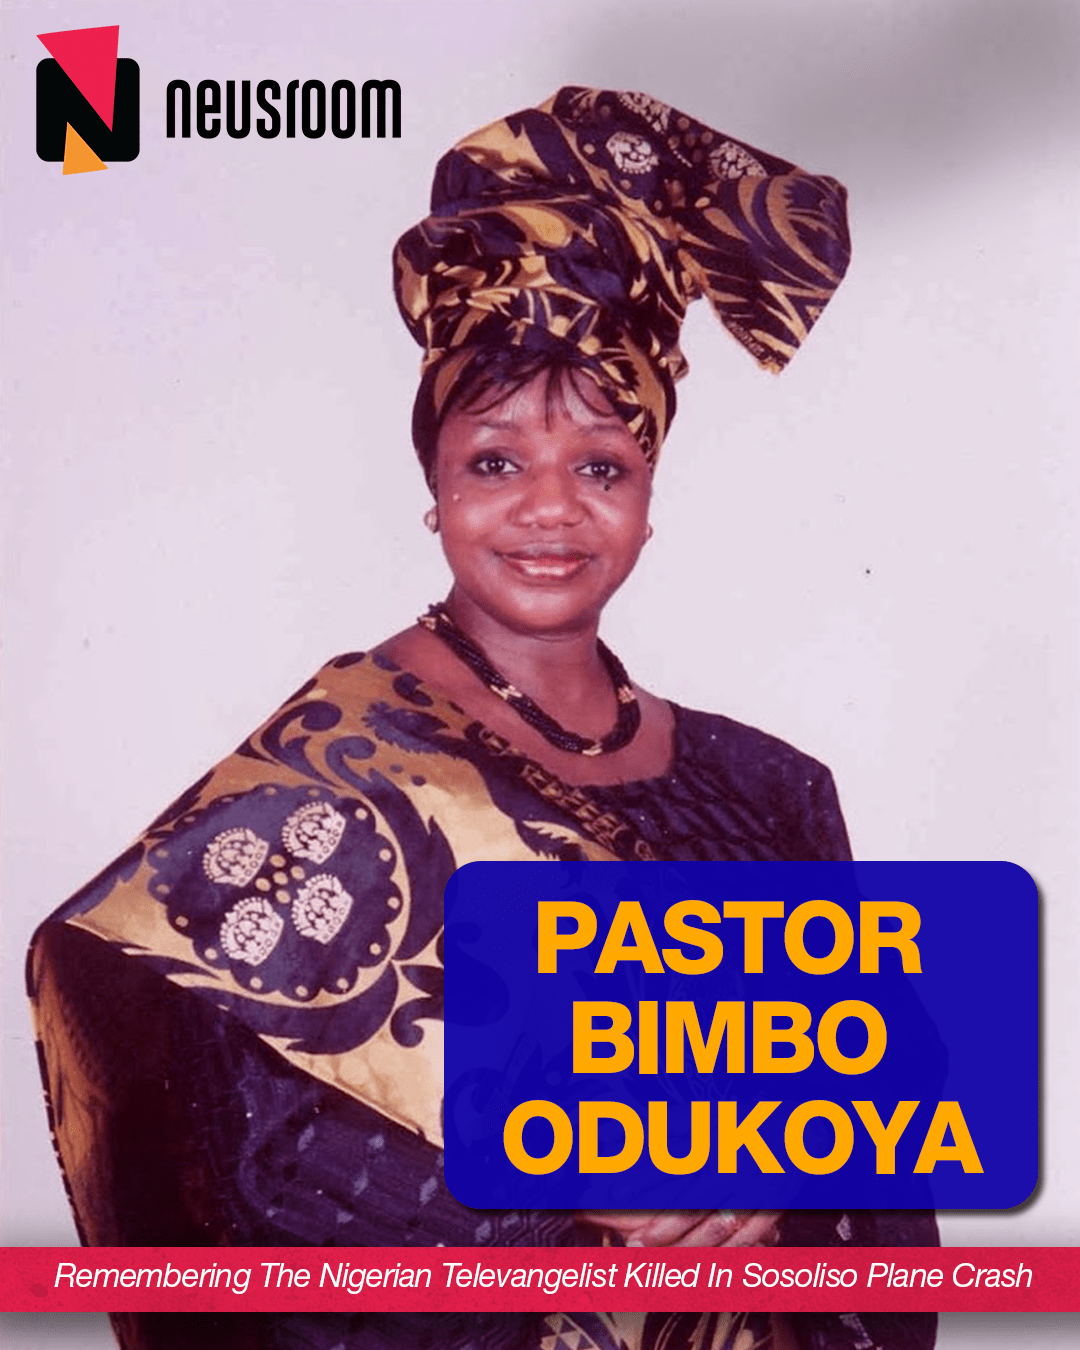 Remembering Pastor Bimbo Odukoya, the Nigerian televangelist killed in